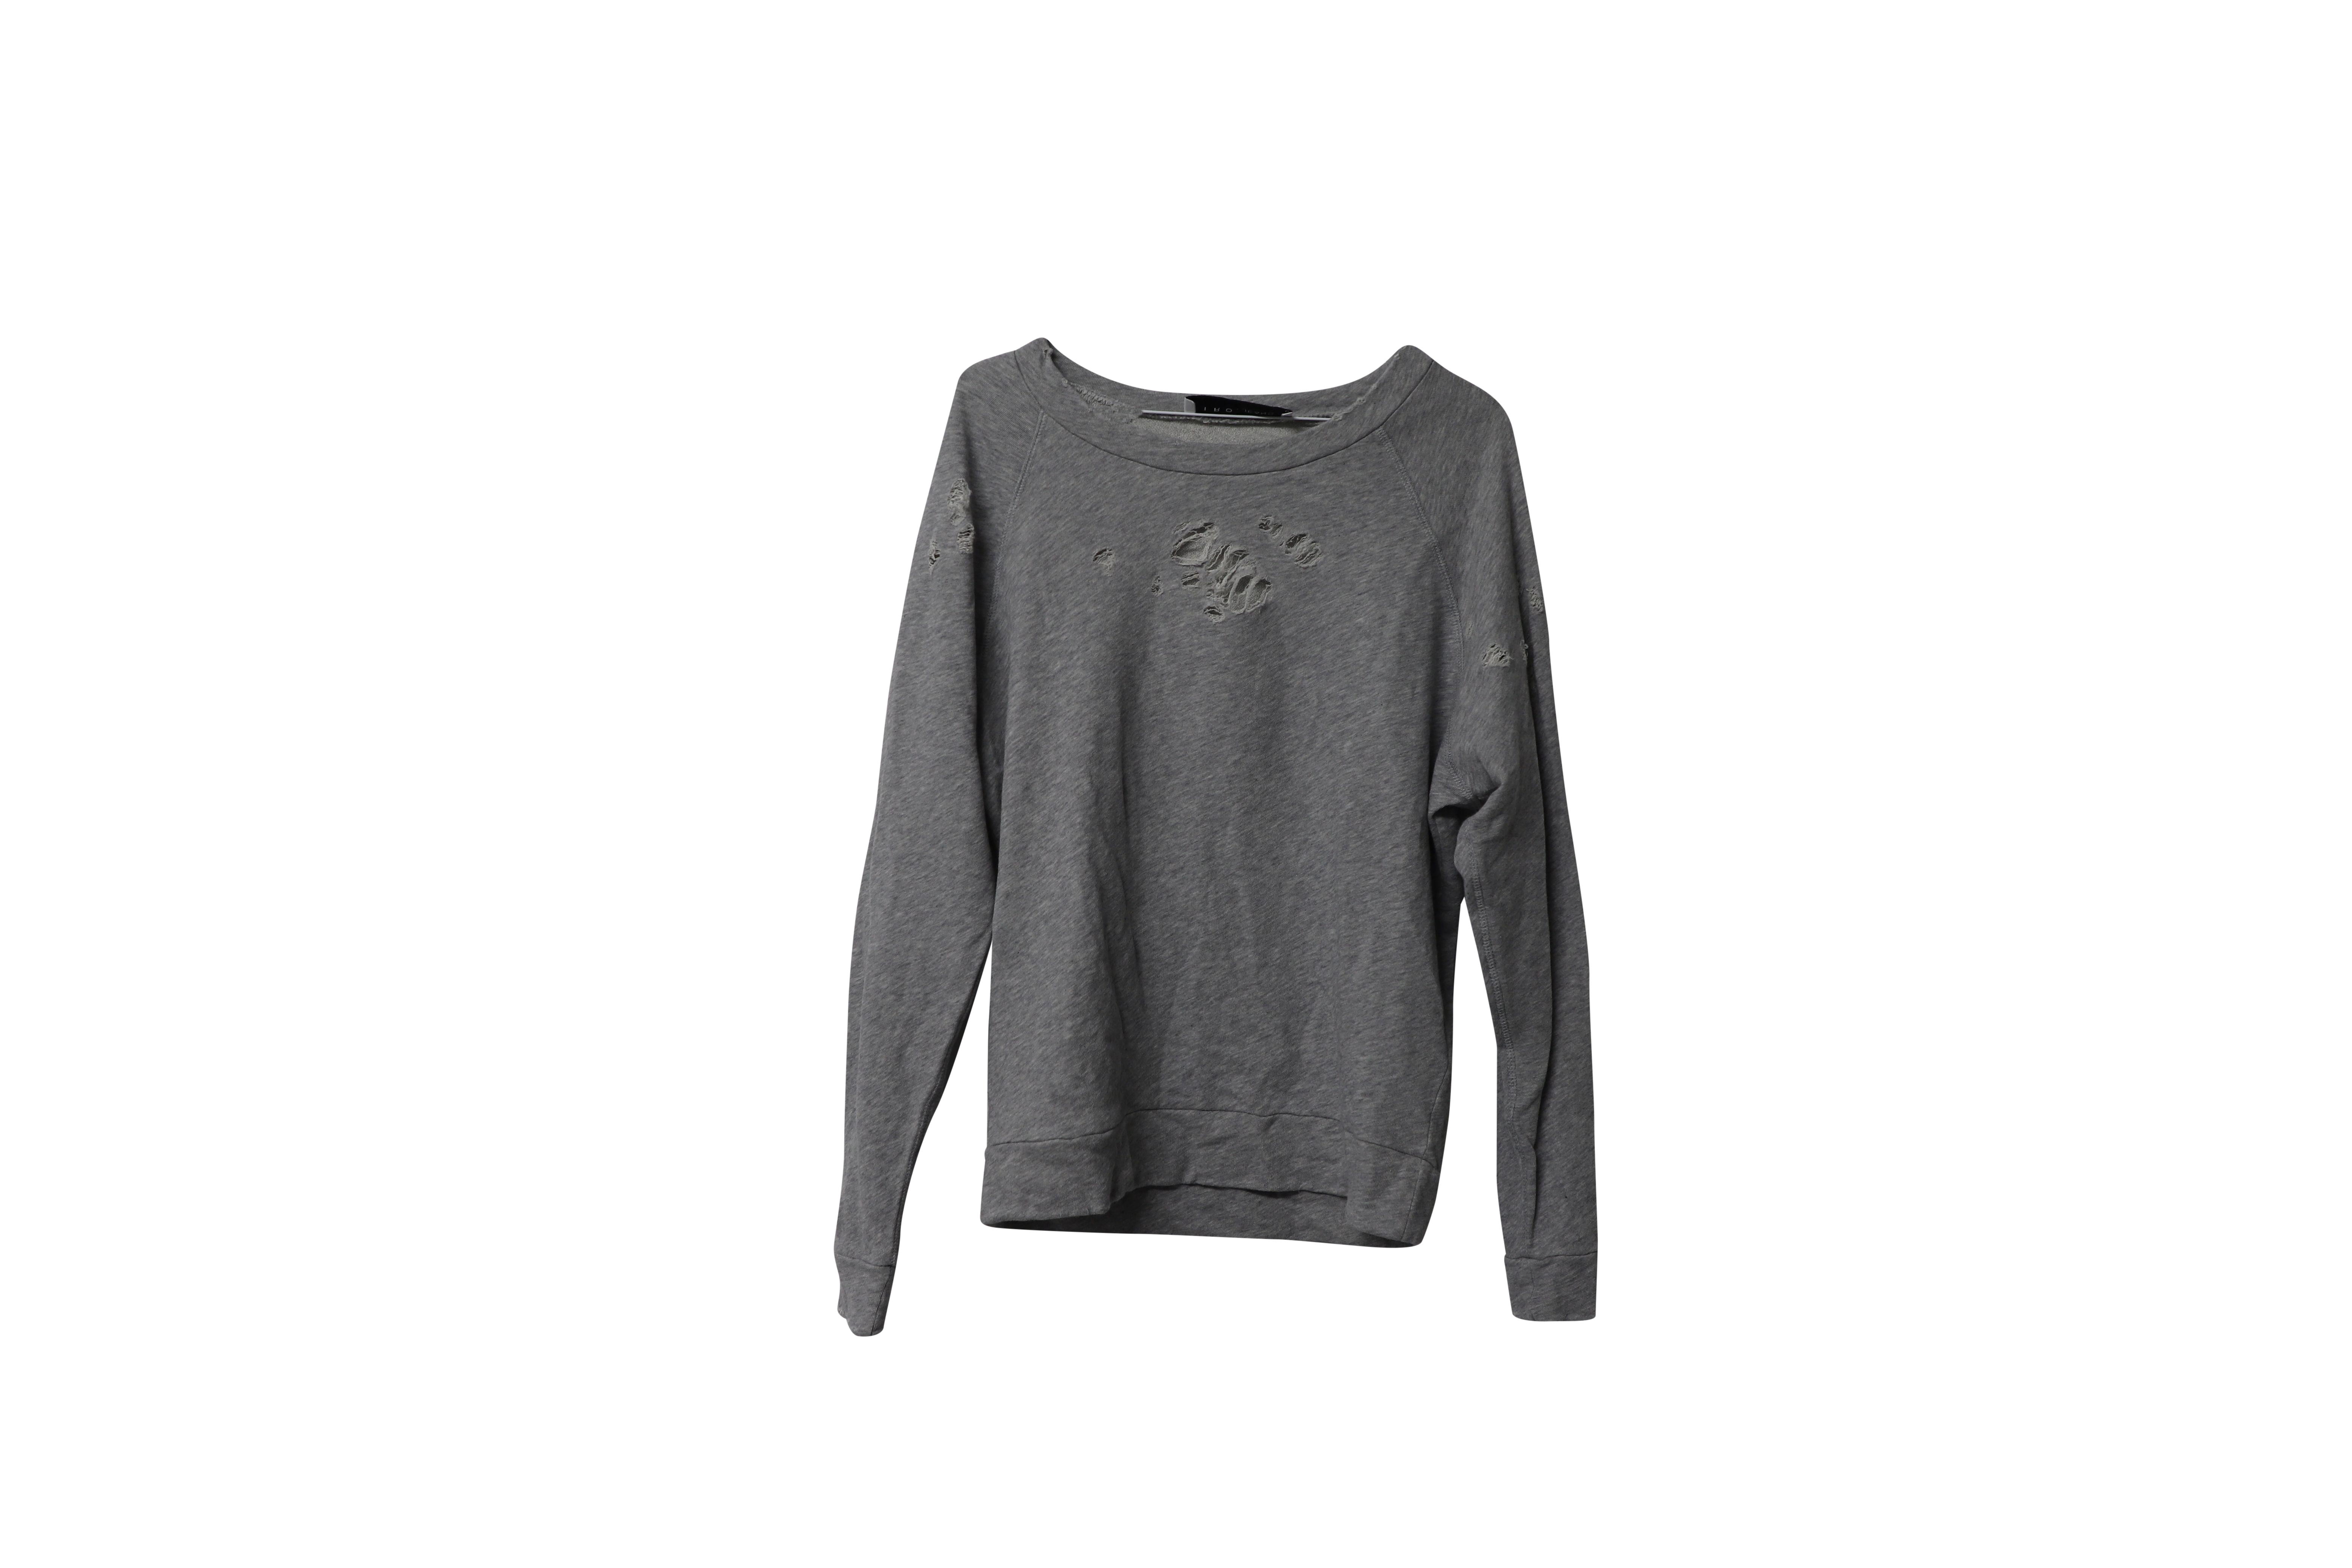 Distressed Grey Cotton Sweatshirt